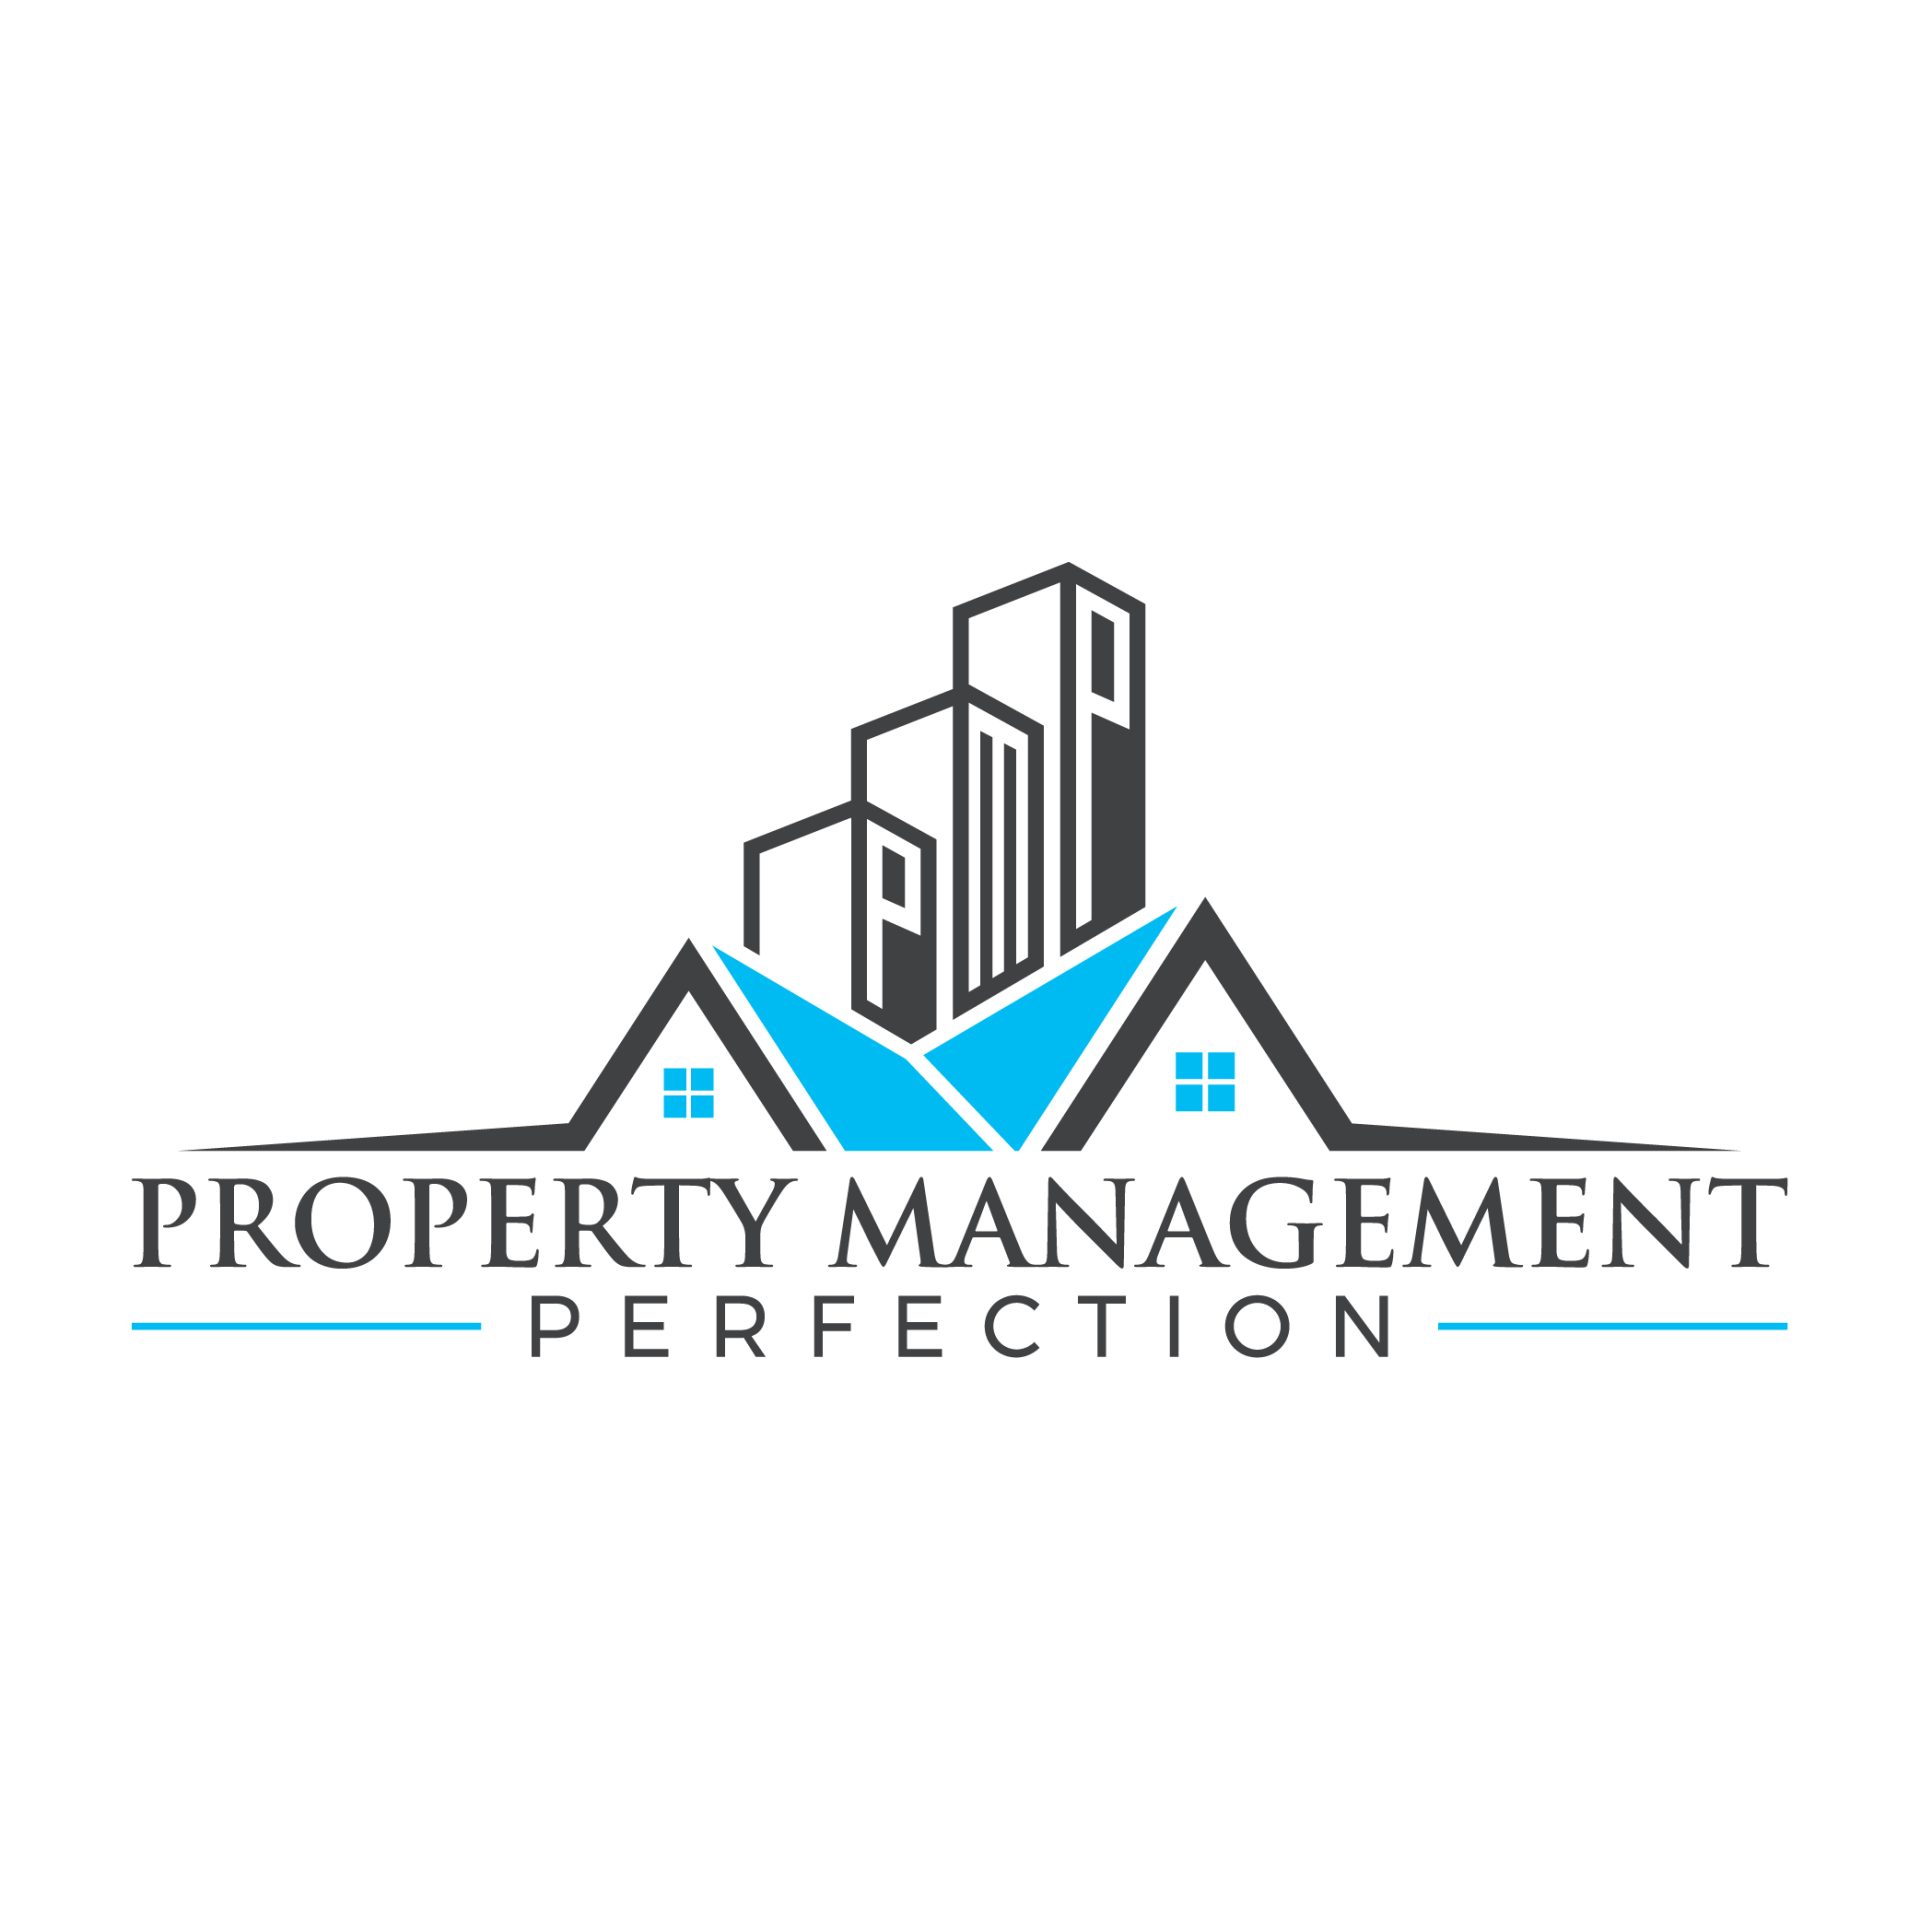 property management logo ideas 1